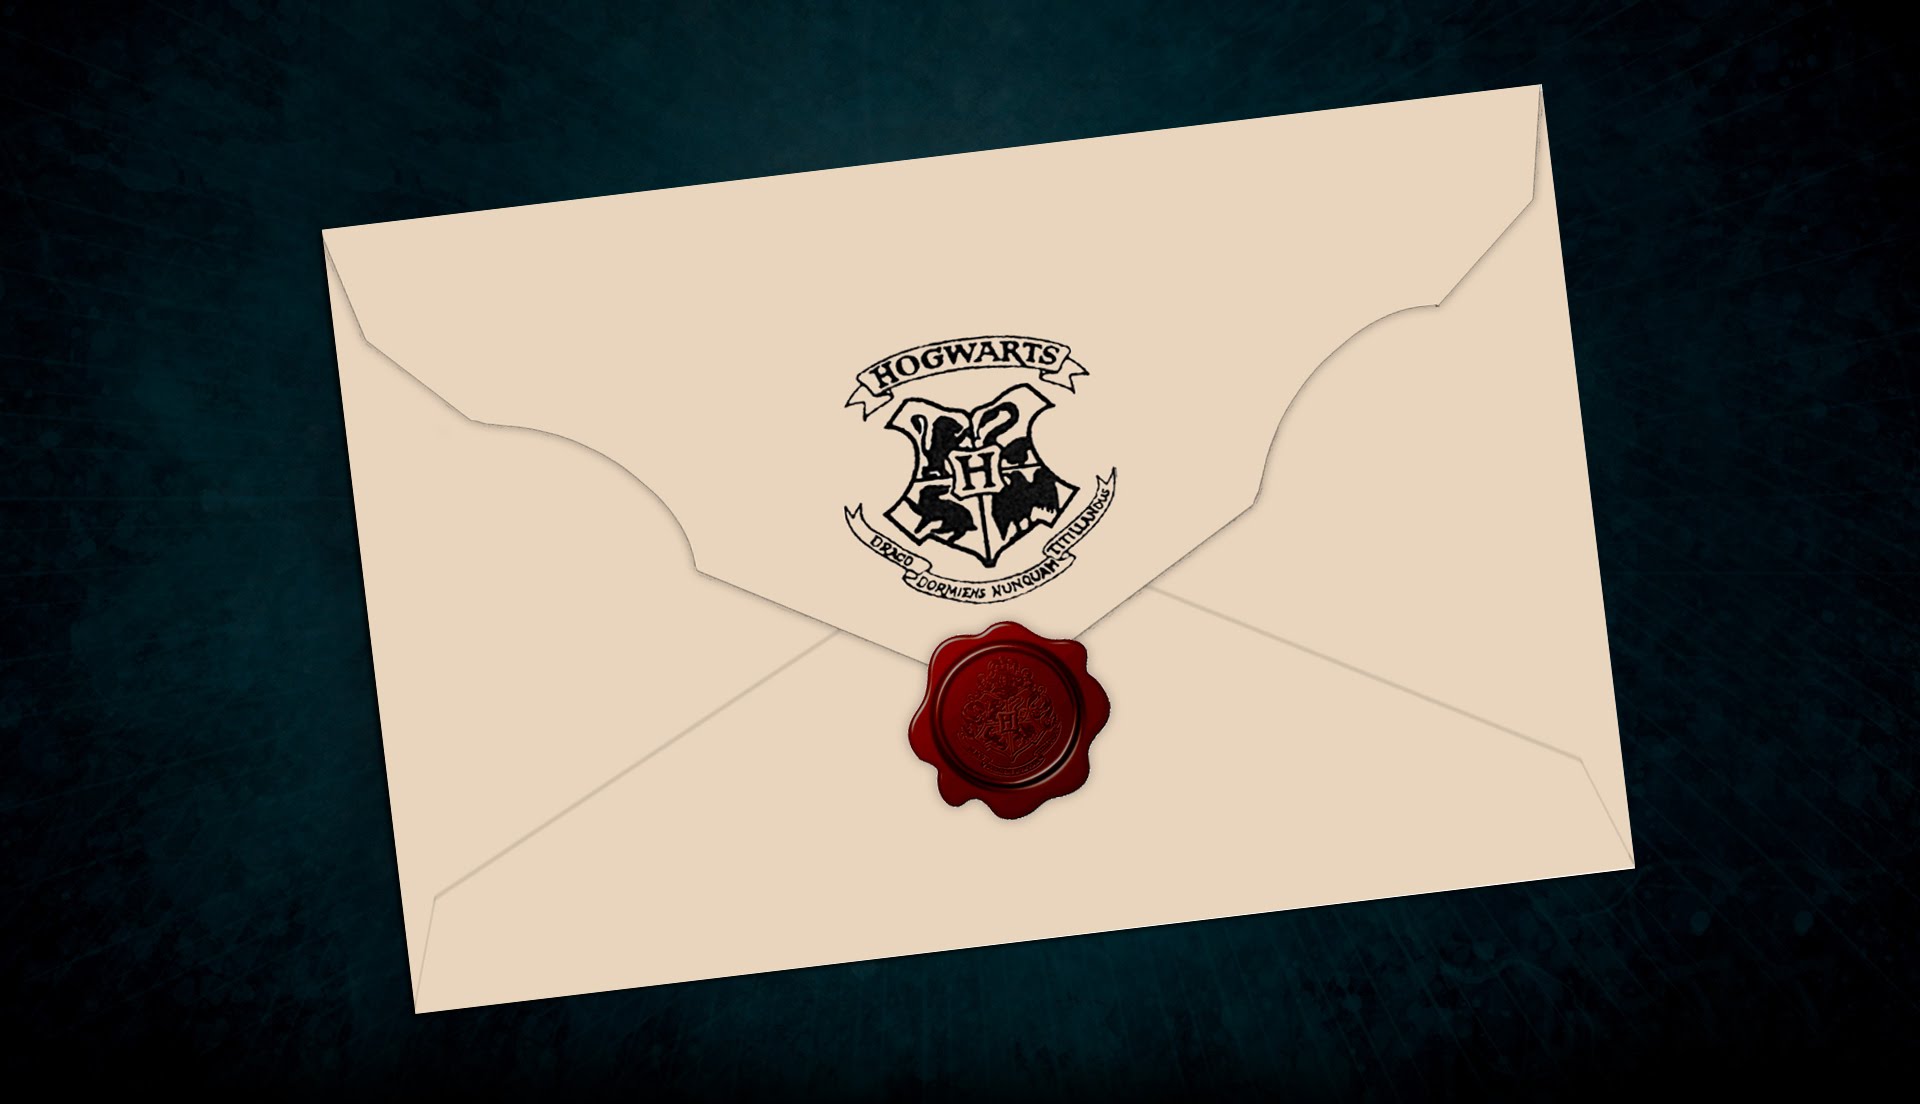 carta-de-hogwarts